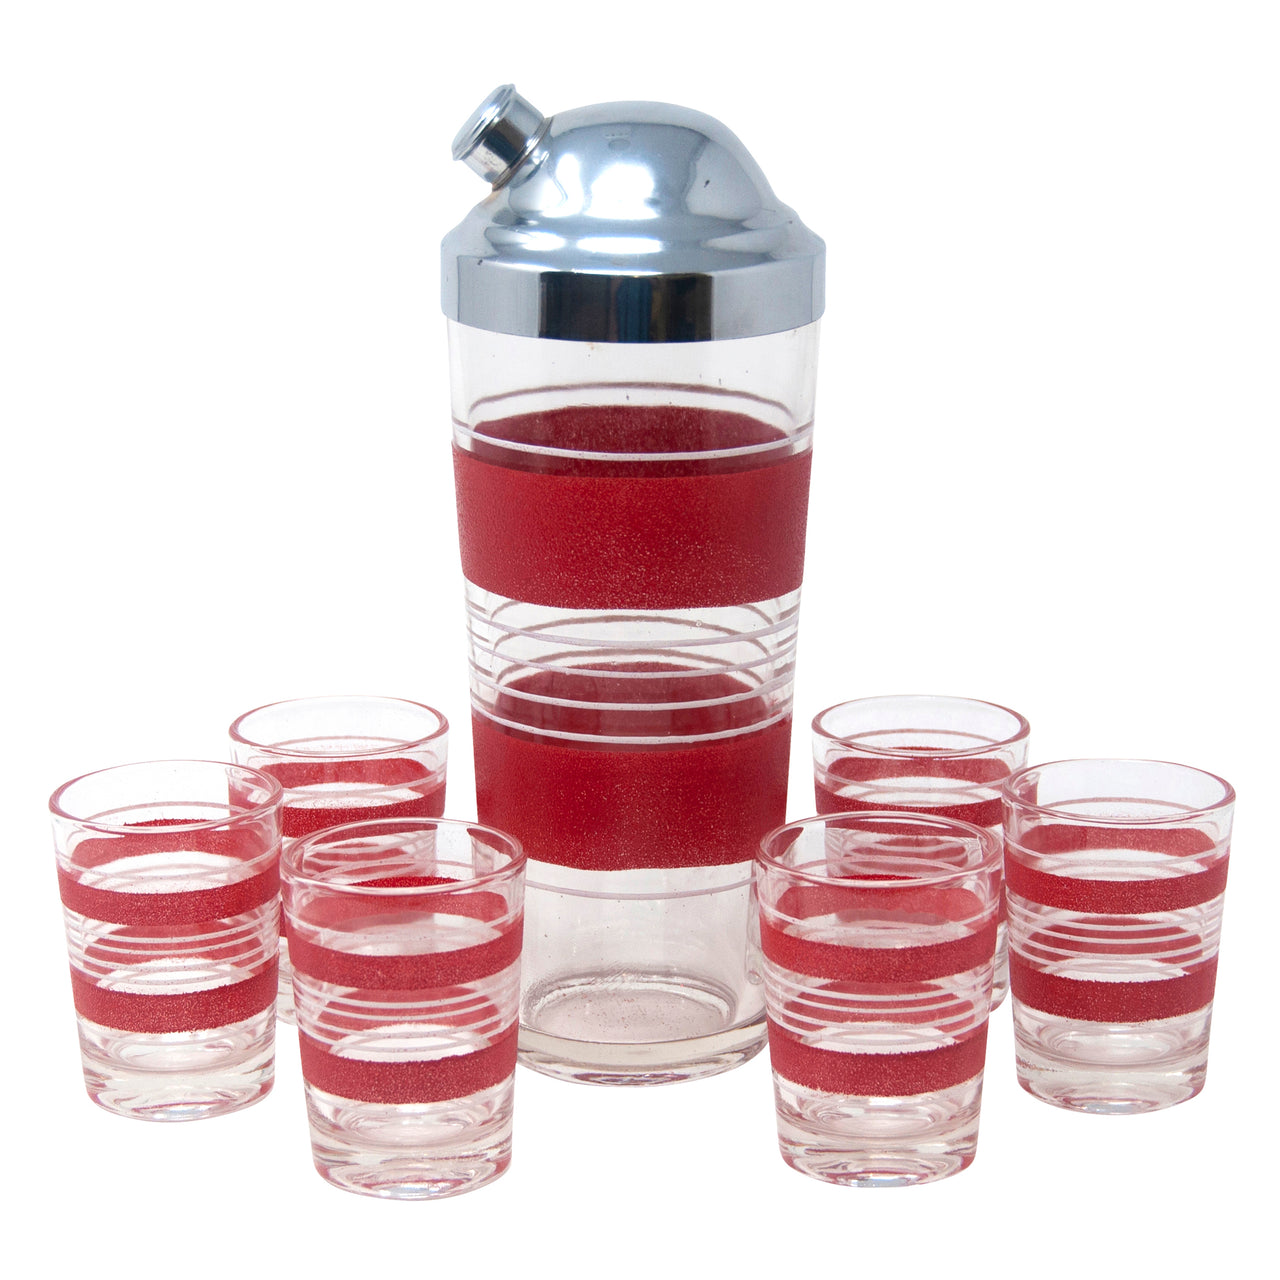 Vintage Red & White Stripe Cocktail Shaker Set | The Hour Shop